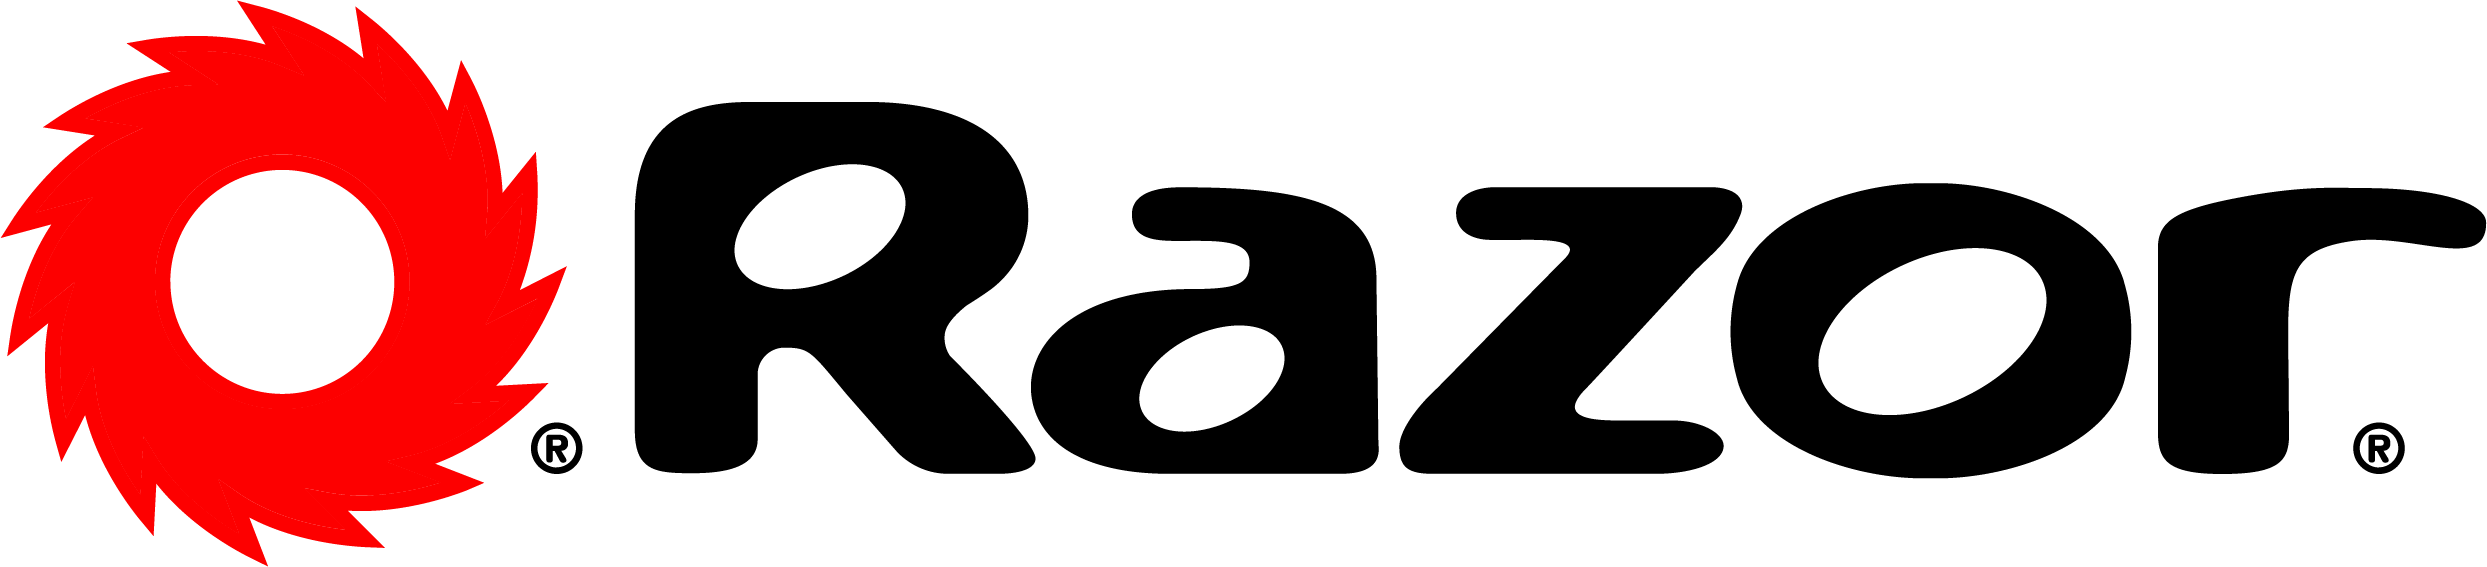 Razor Logo png